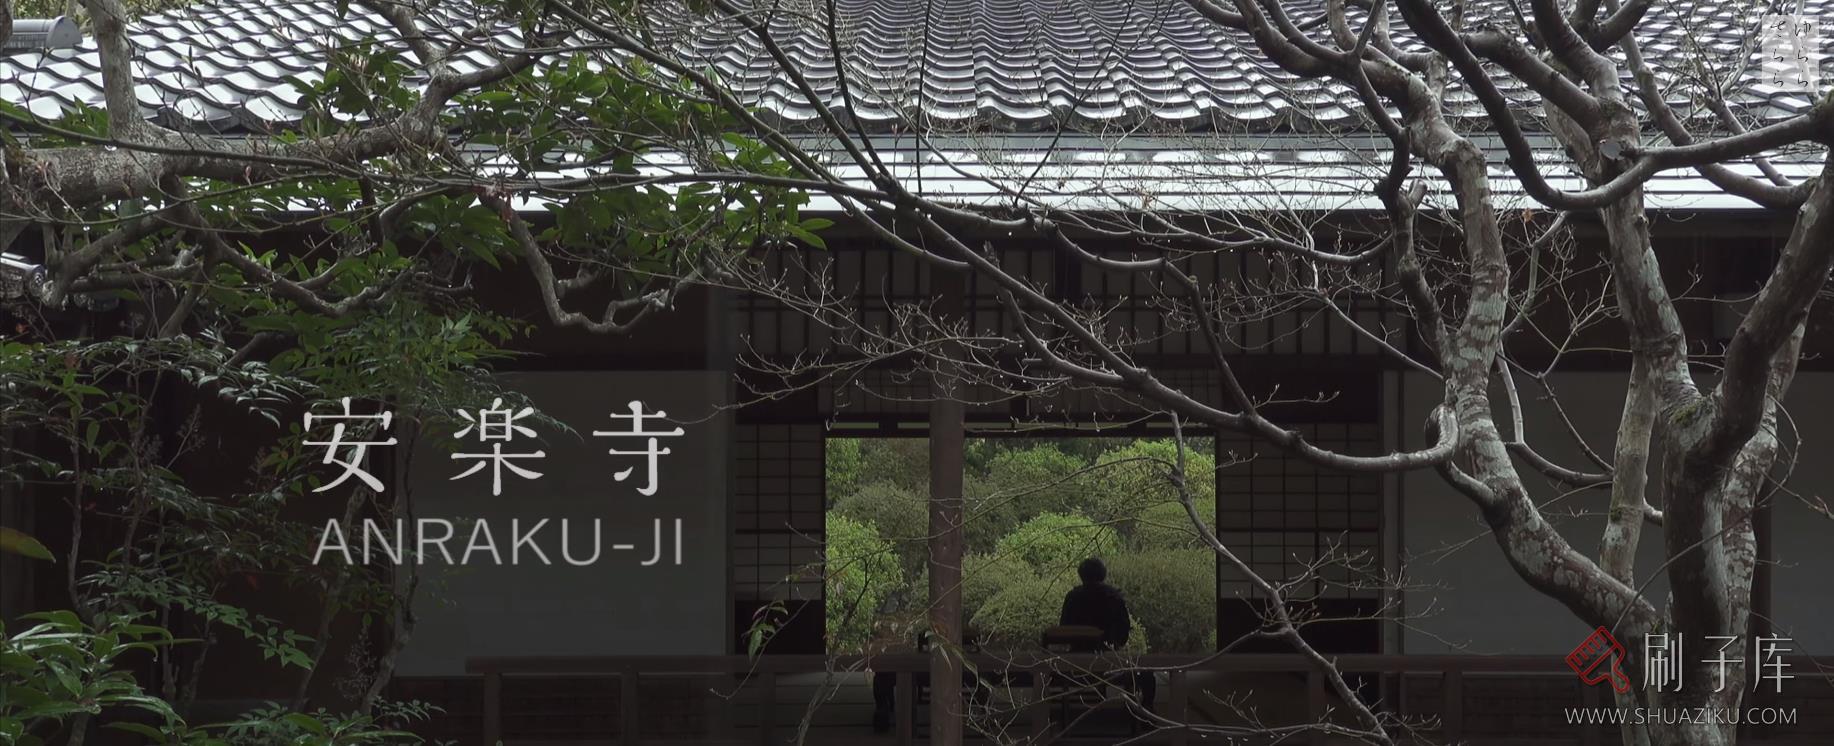 [4K]安楽寺・京都 ANRAKU-JI GARDEN-日式侘寂庭院-刷子库